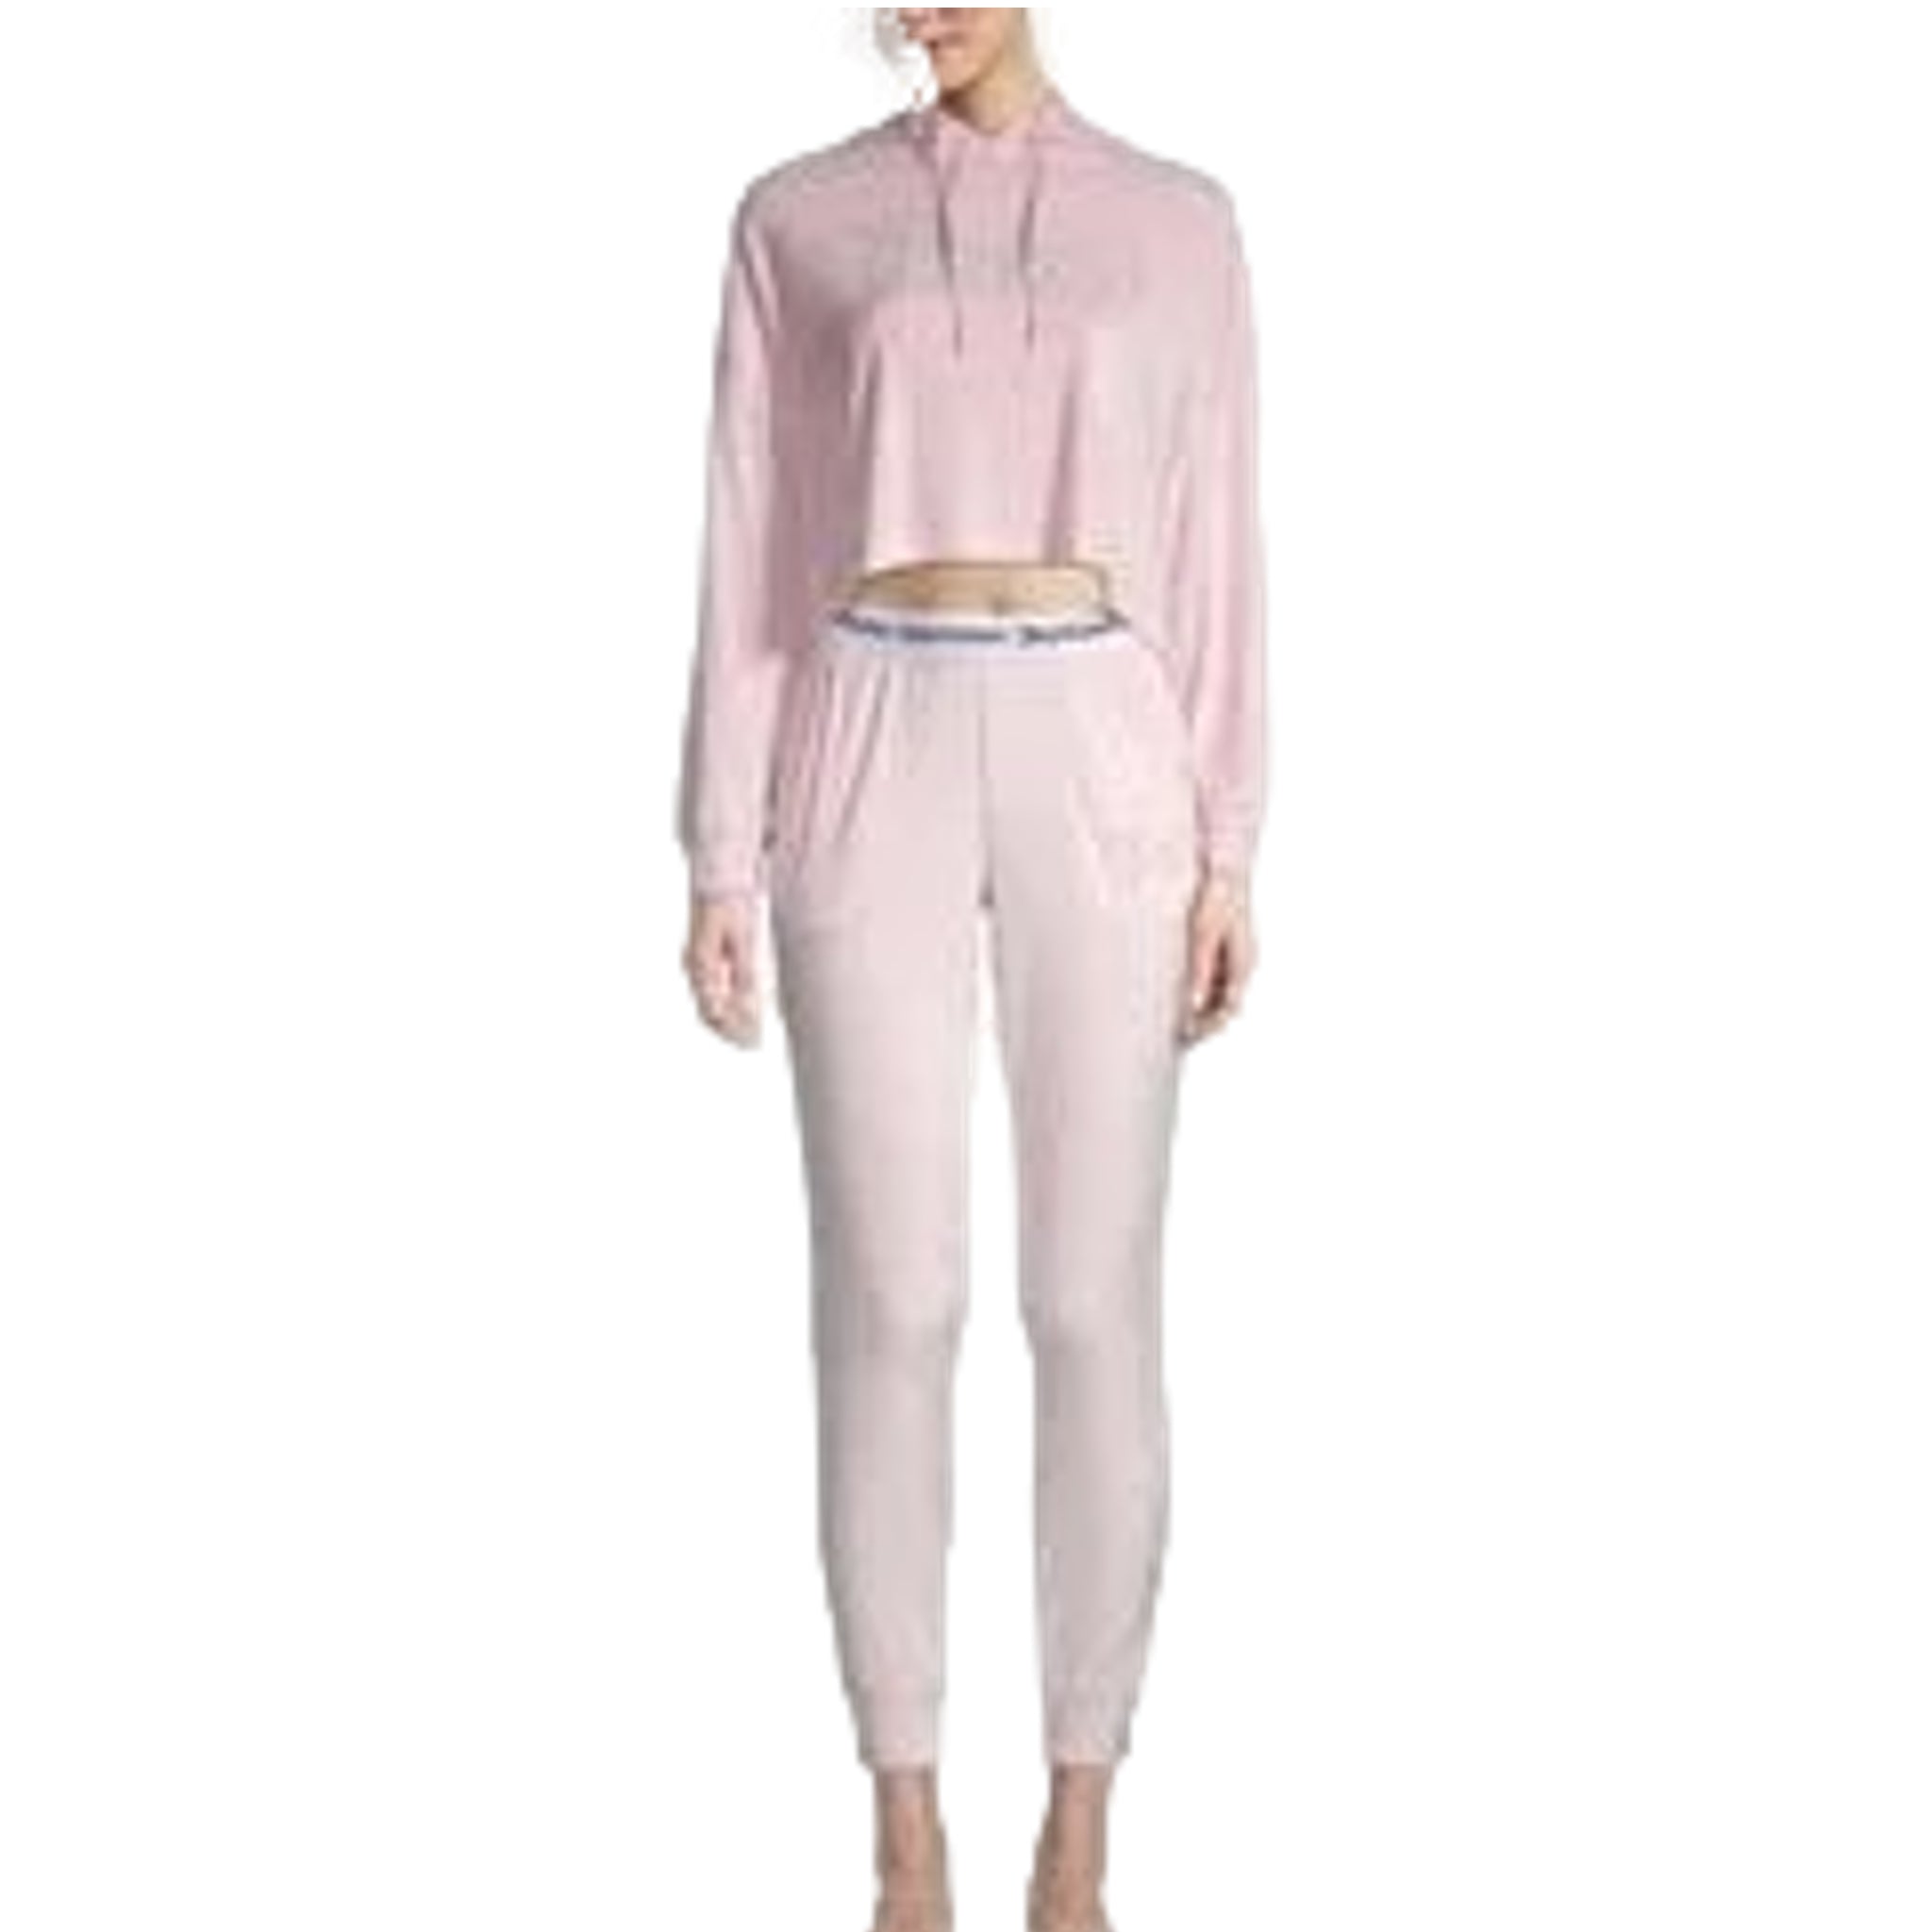 Juicy Couture, Intimates & Sleepwear, Nwt Juicy Couture Pink Rhinestone  Bling Corset 34b Y2k